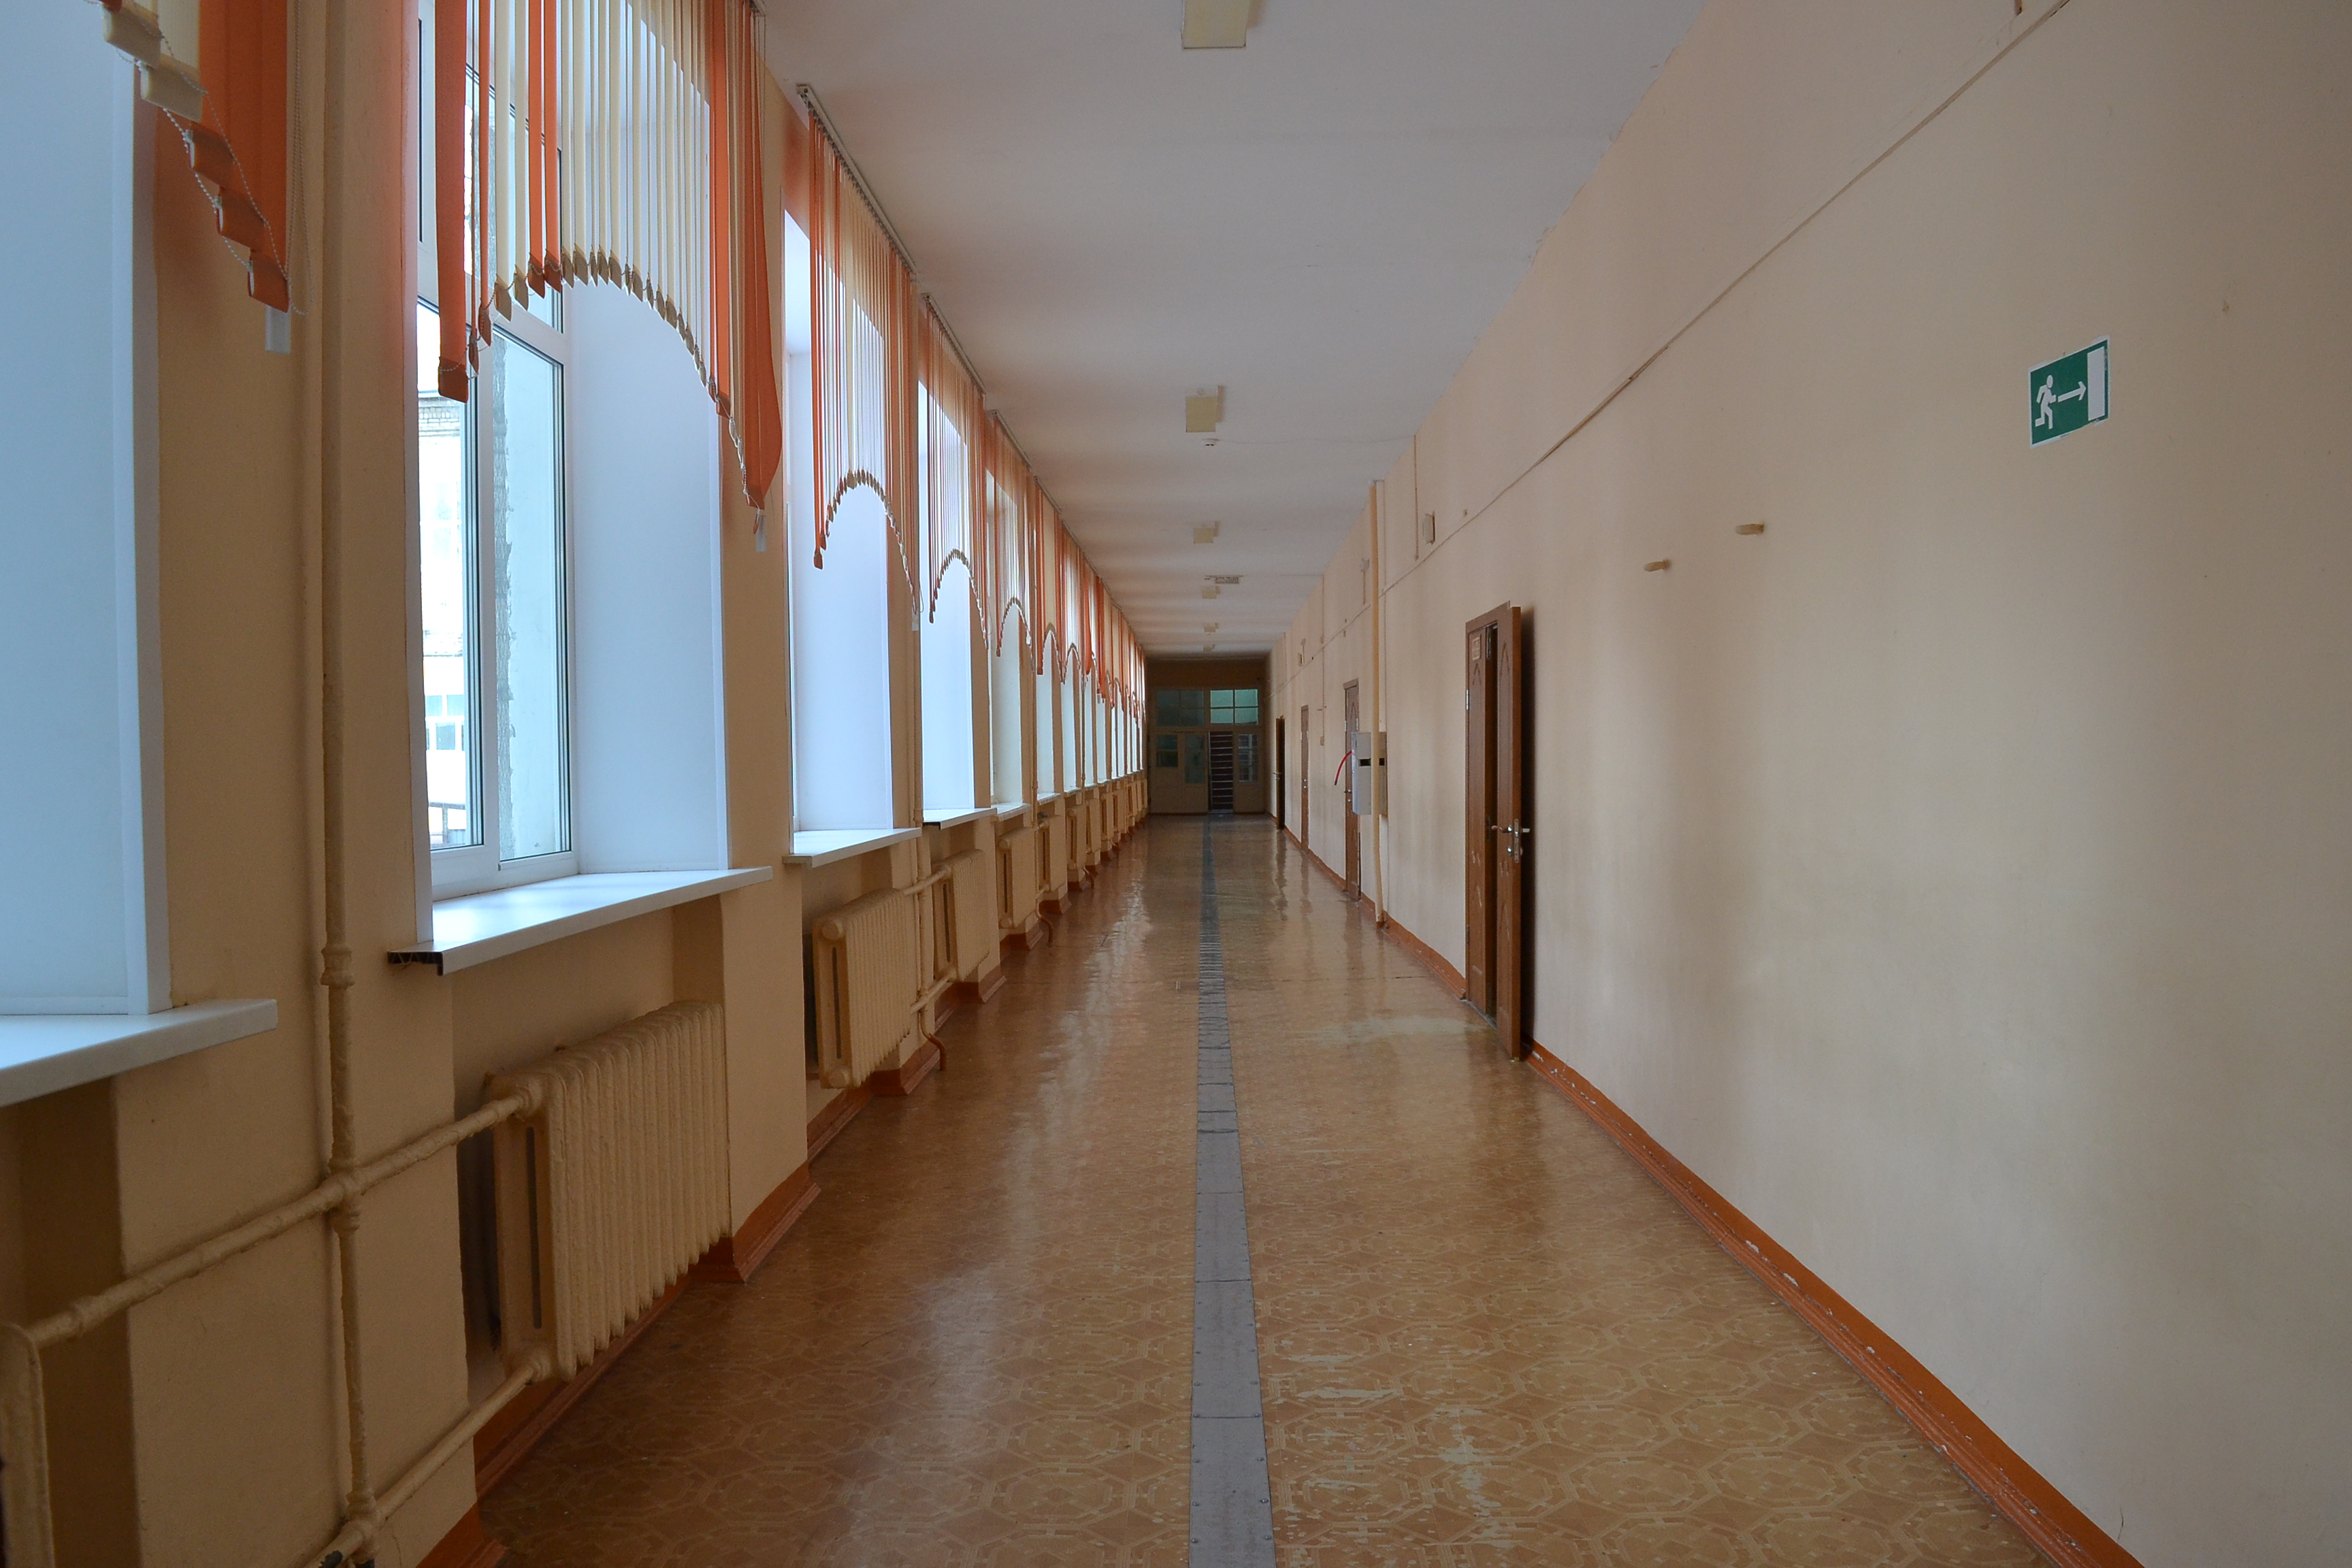 Первый этаж школы